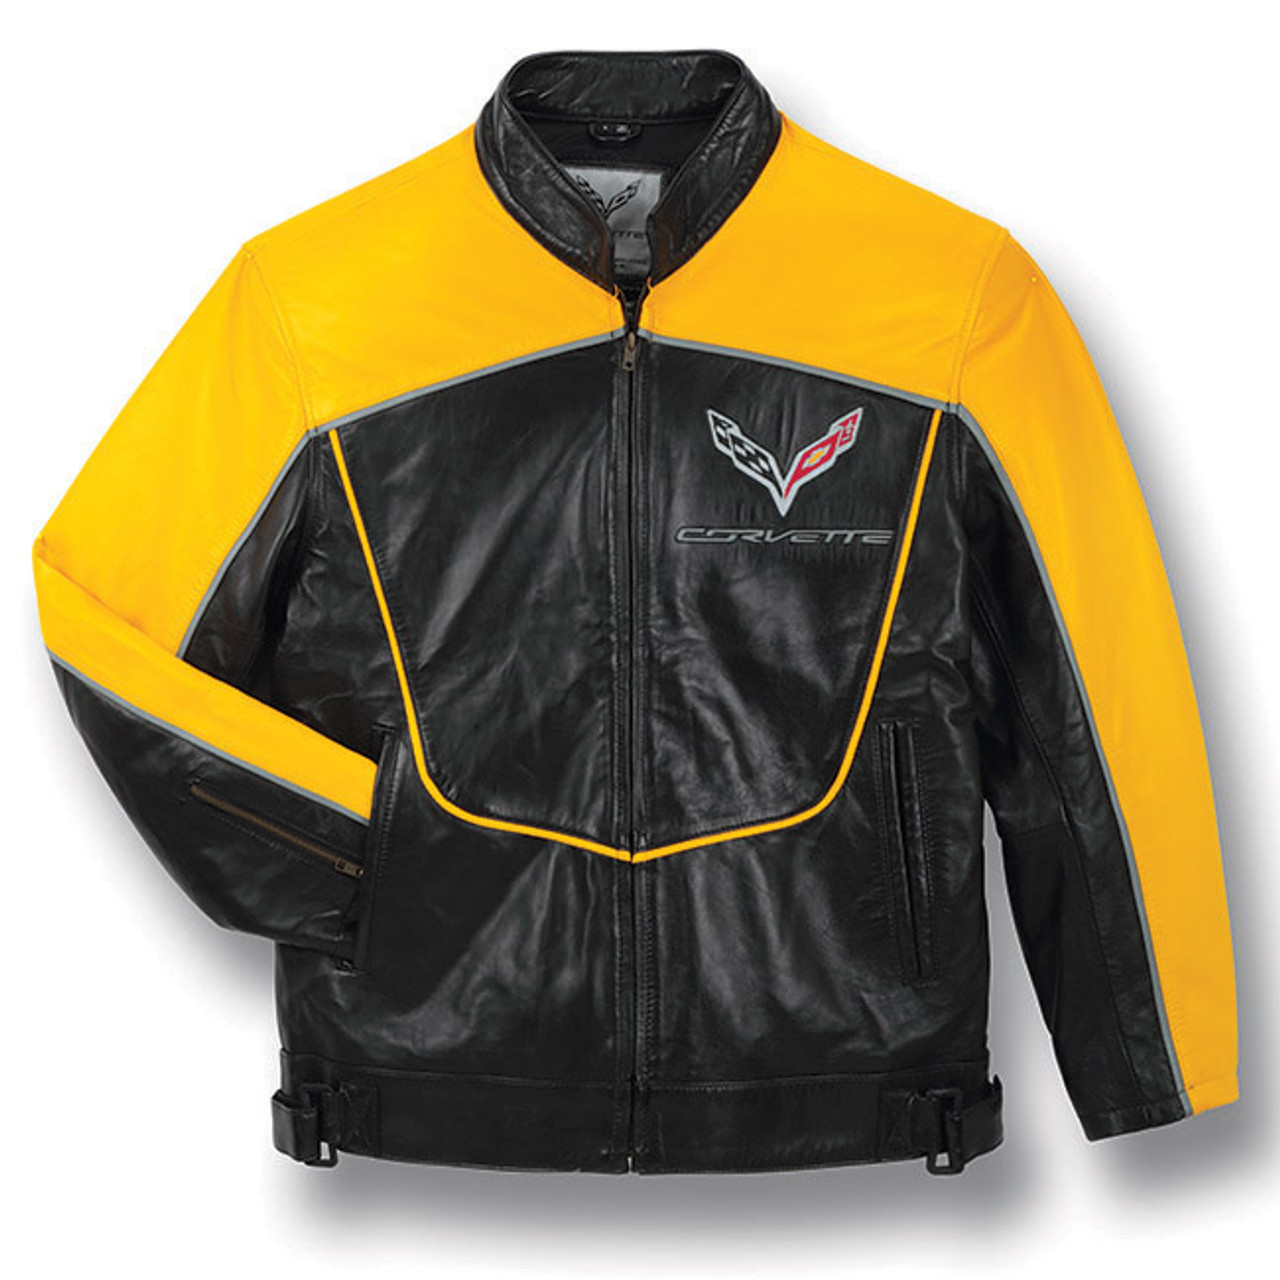 Official Corvette Leather Jacket - Jackets & Coats